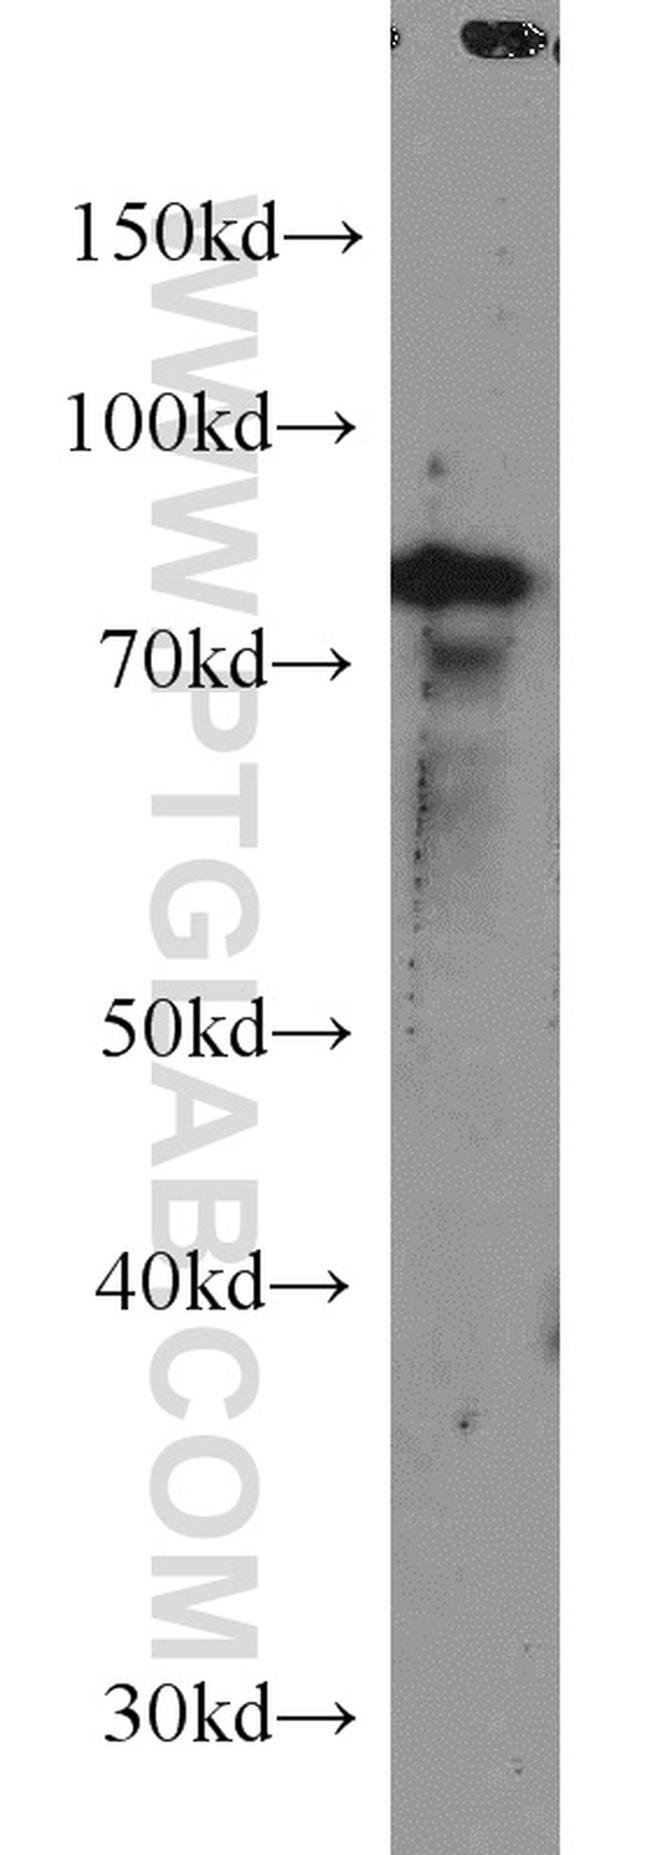 SPATA7 Antibody in Western Blot (WB)